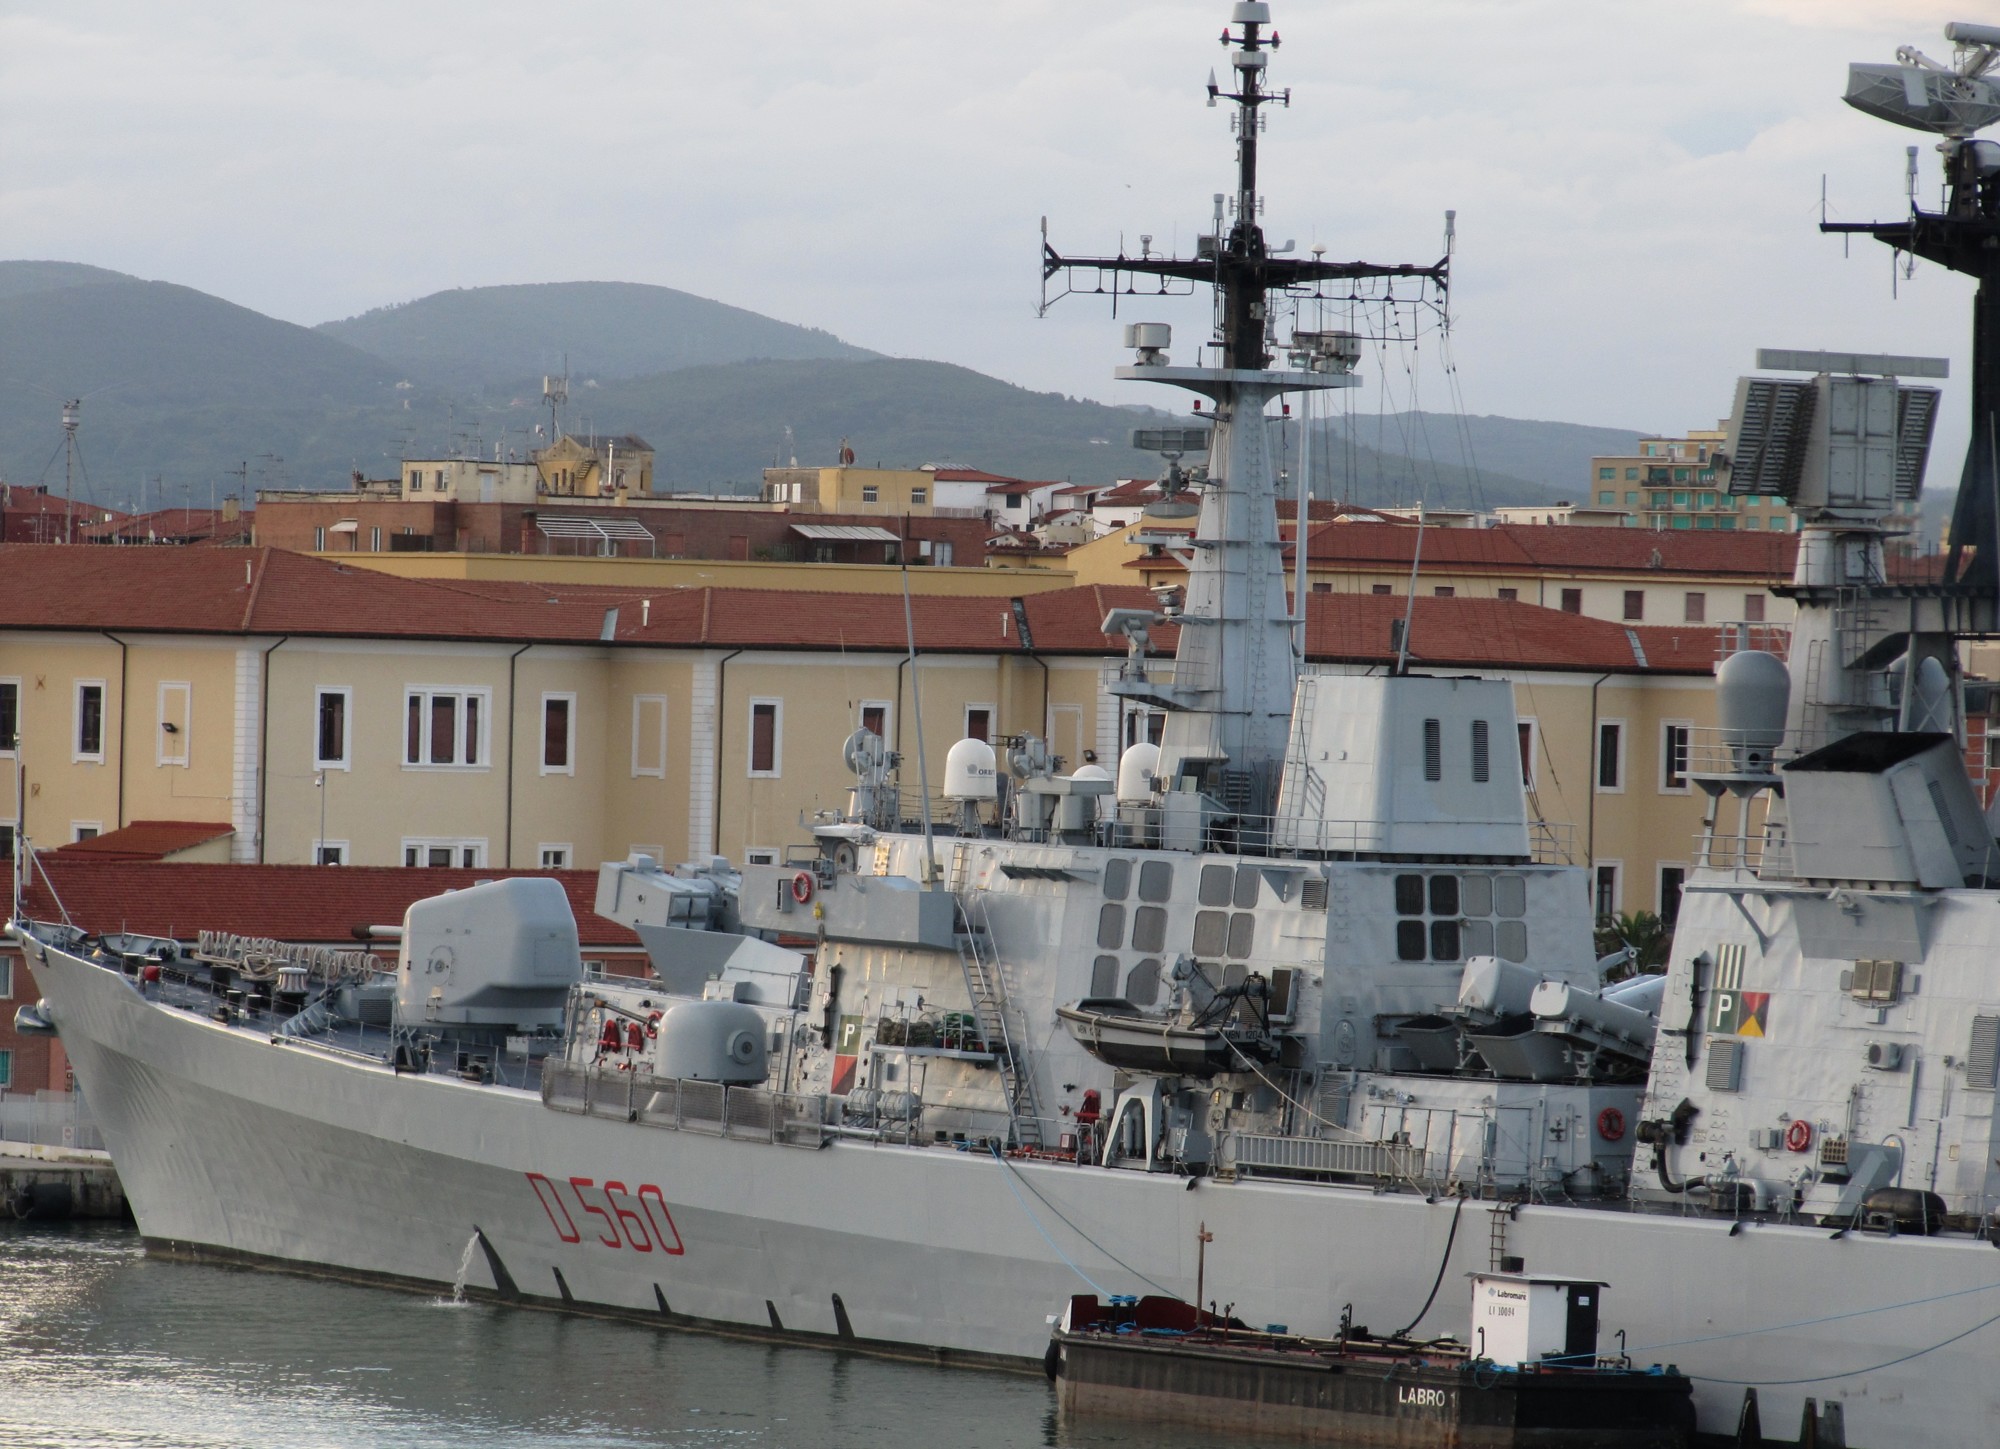 d-560 luigi durand de la penne its nave guided missile destroyer ddg italian navy marina militare 68